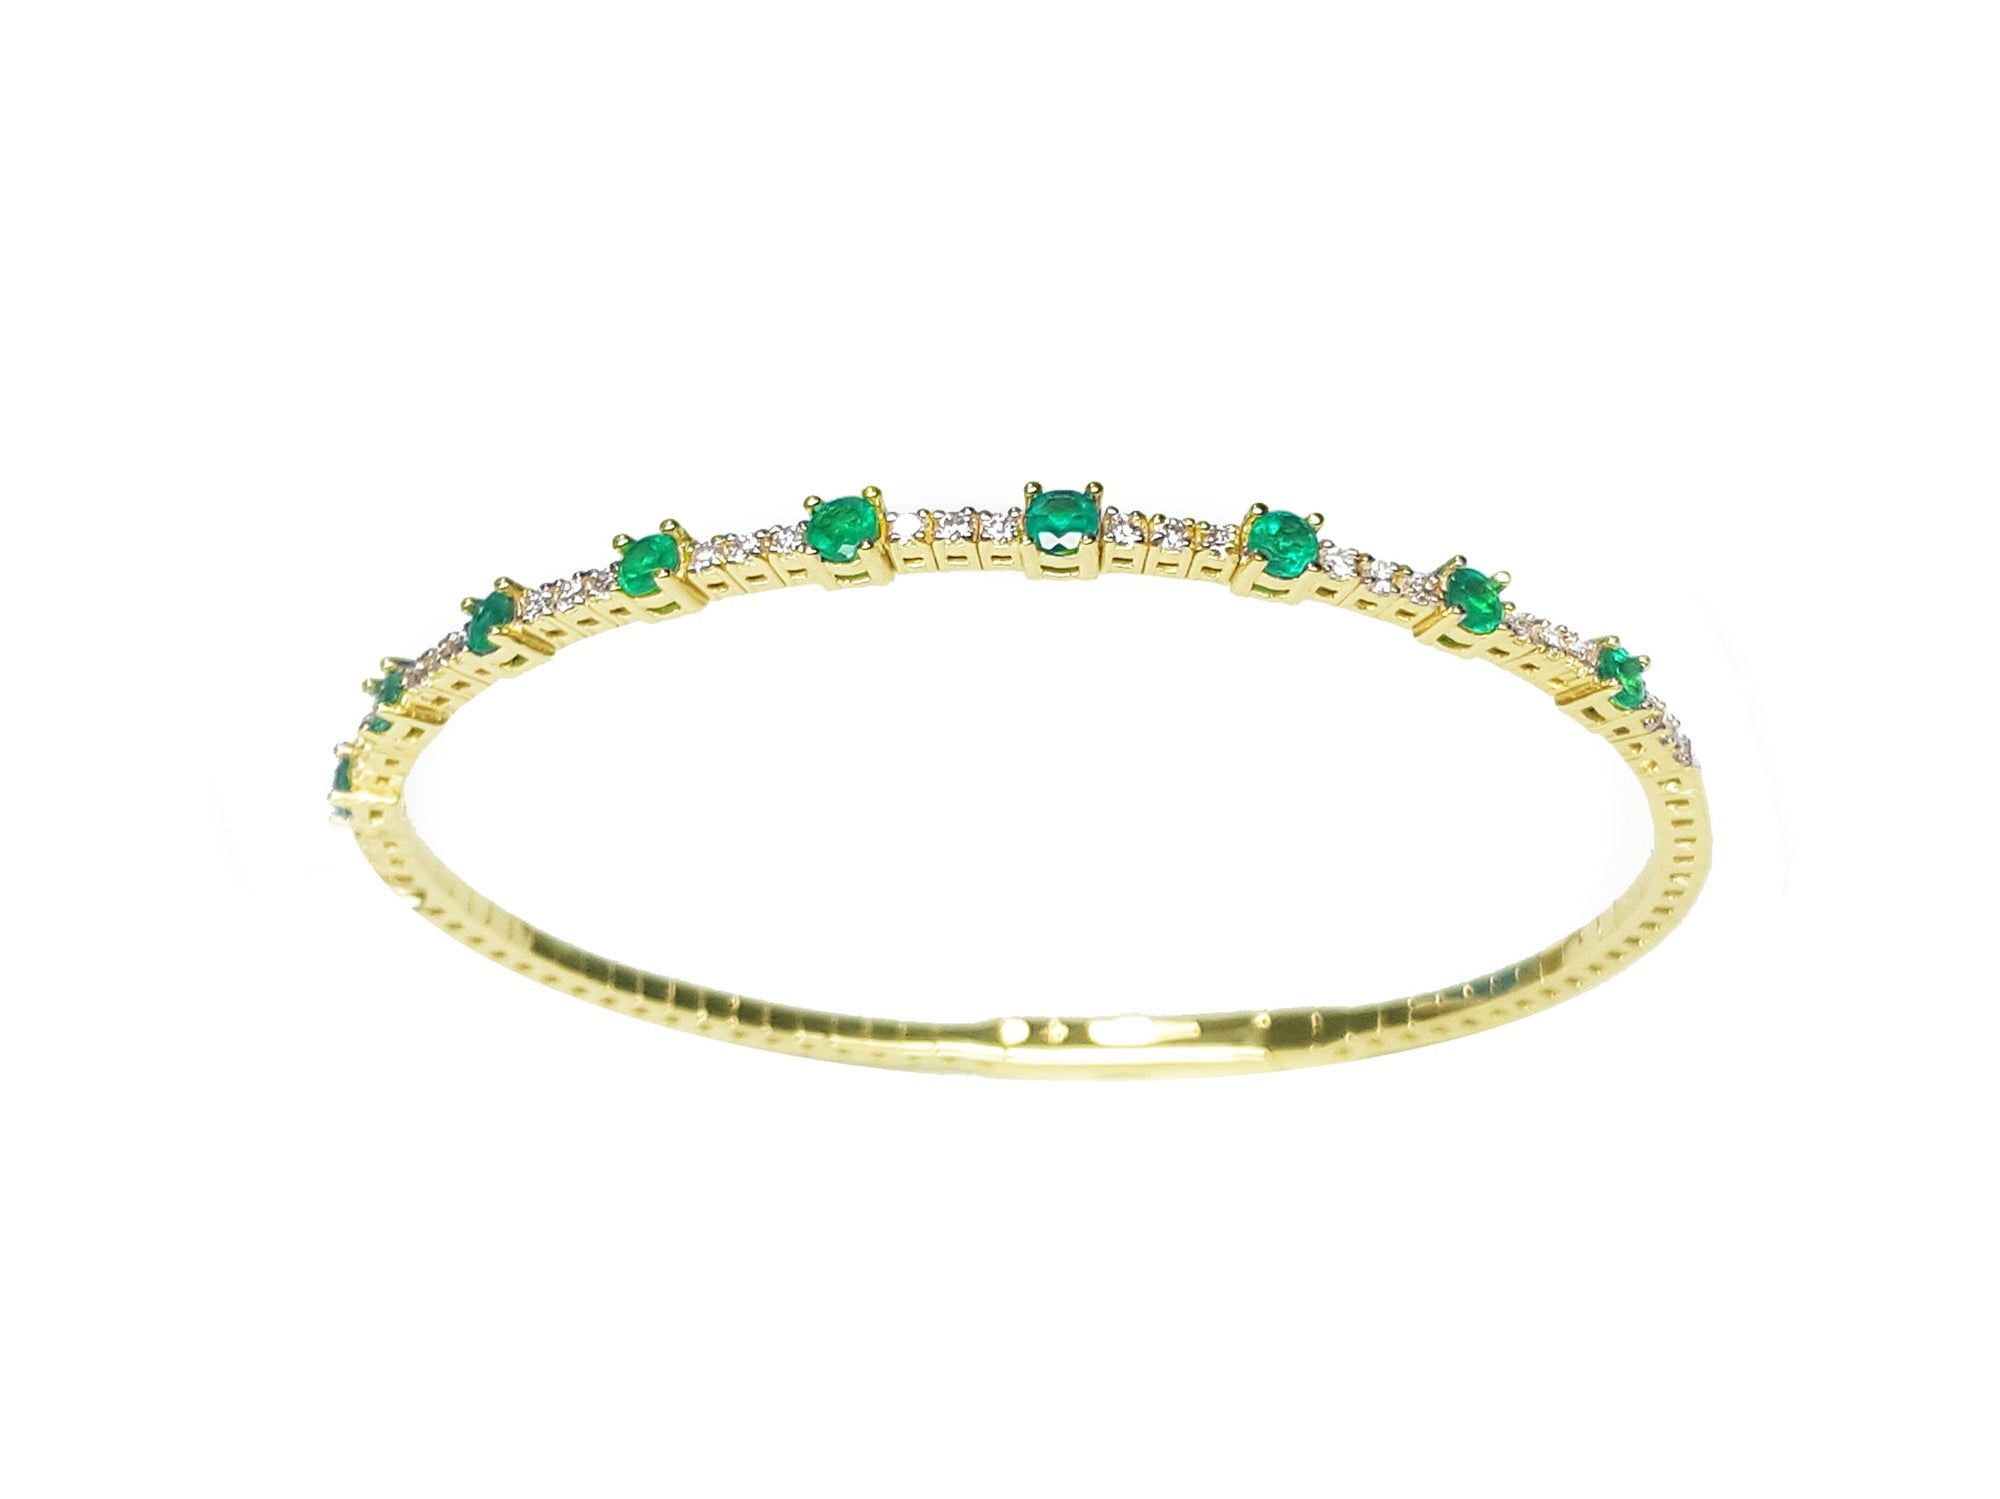 Flexible emerald bangle bracelet